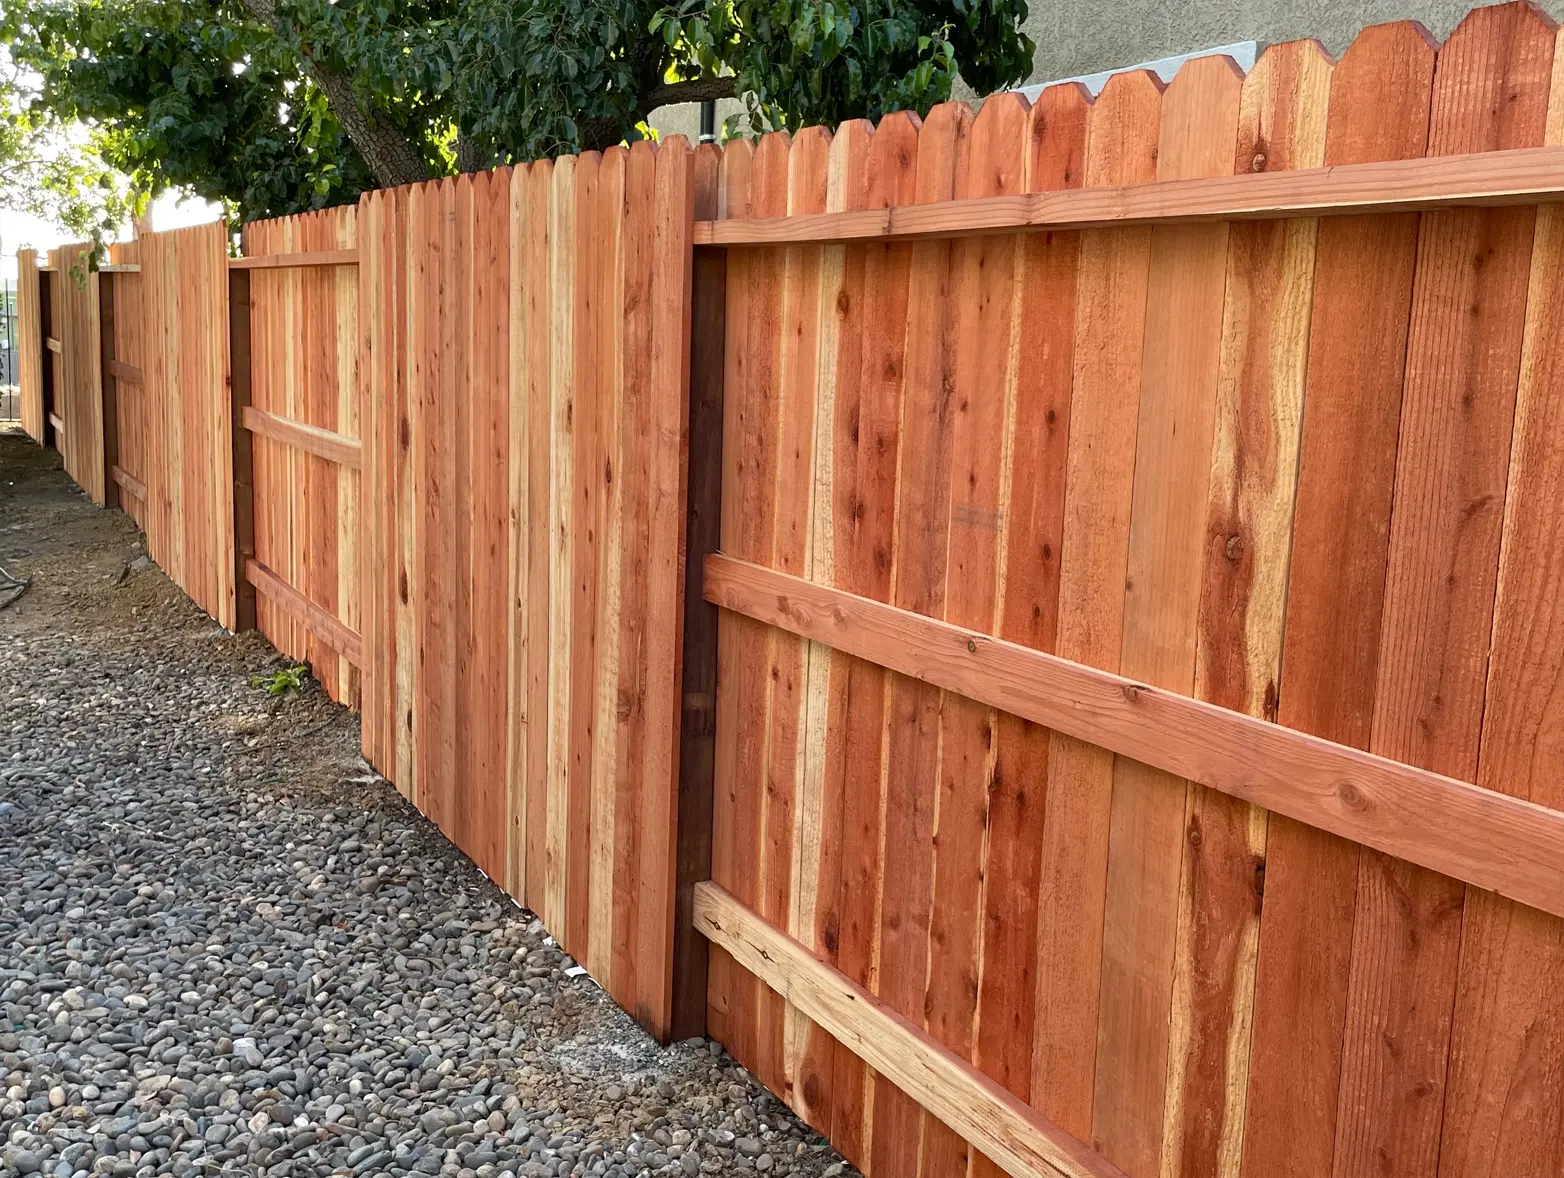 Good neighbor residential fence